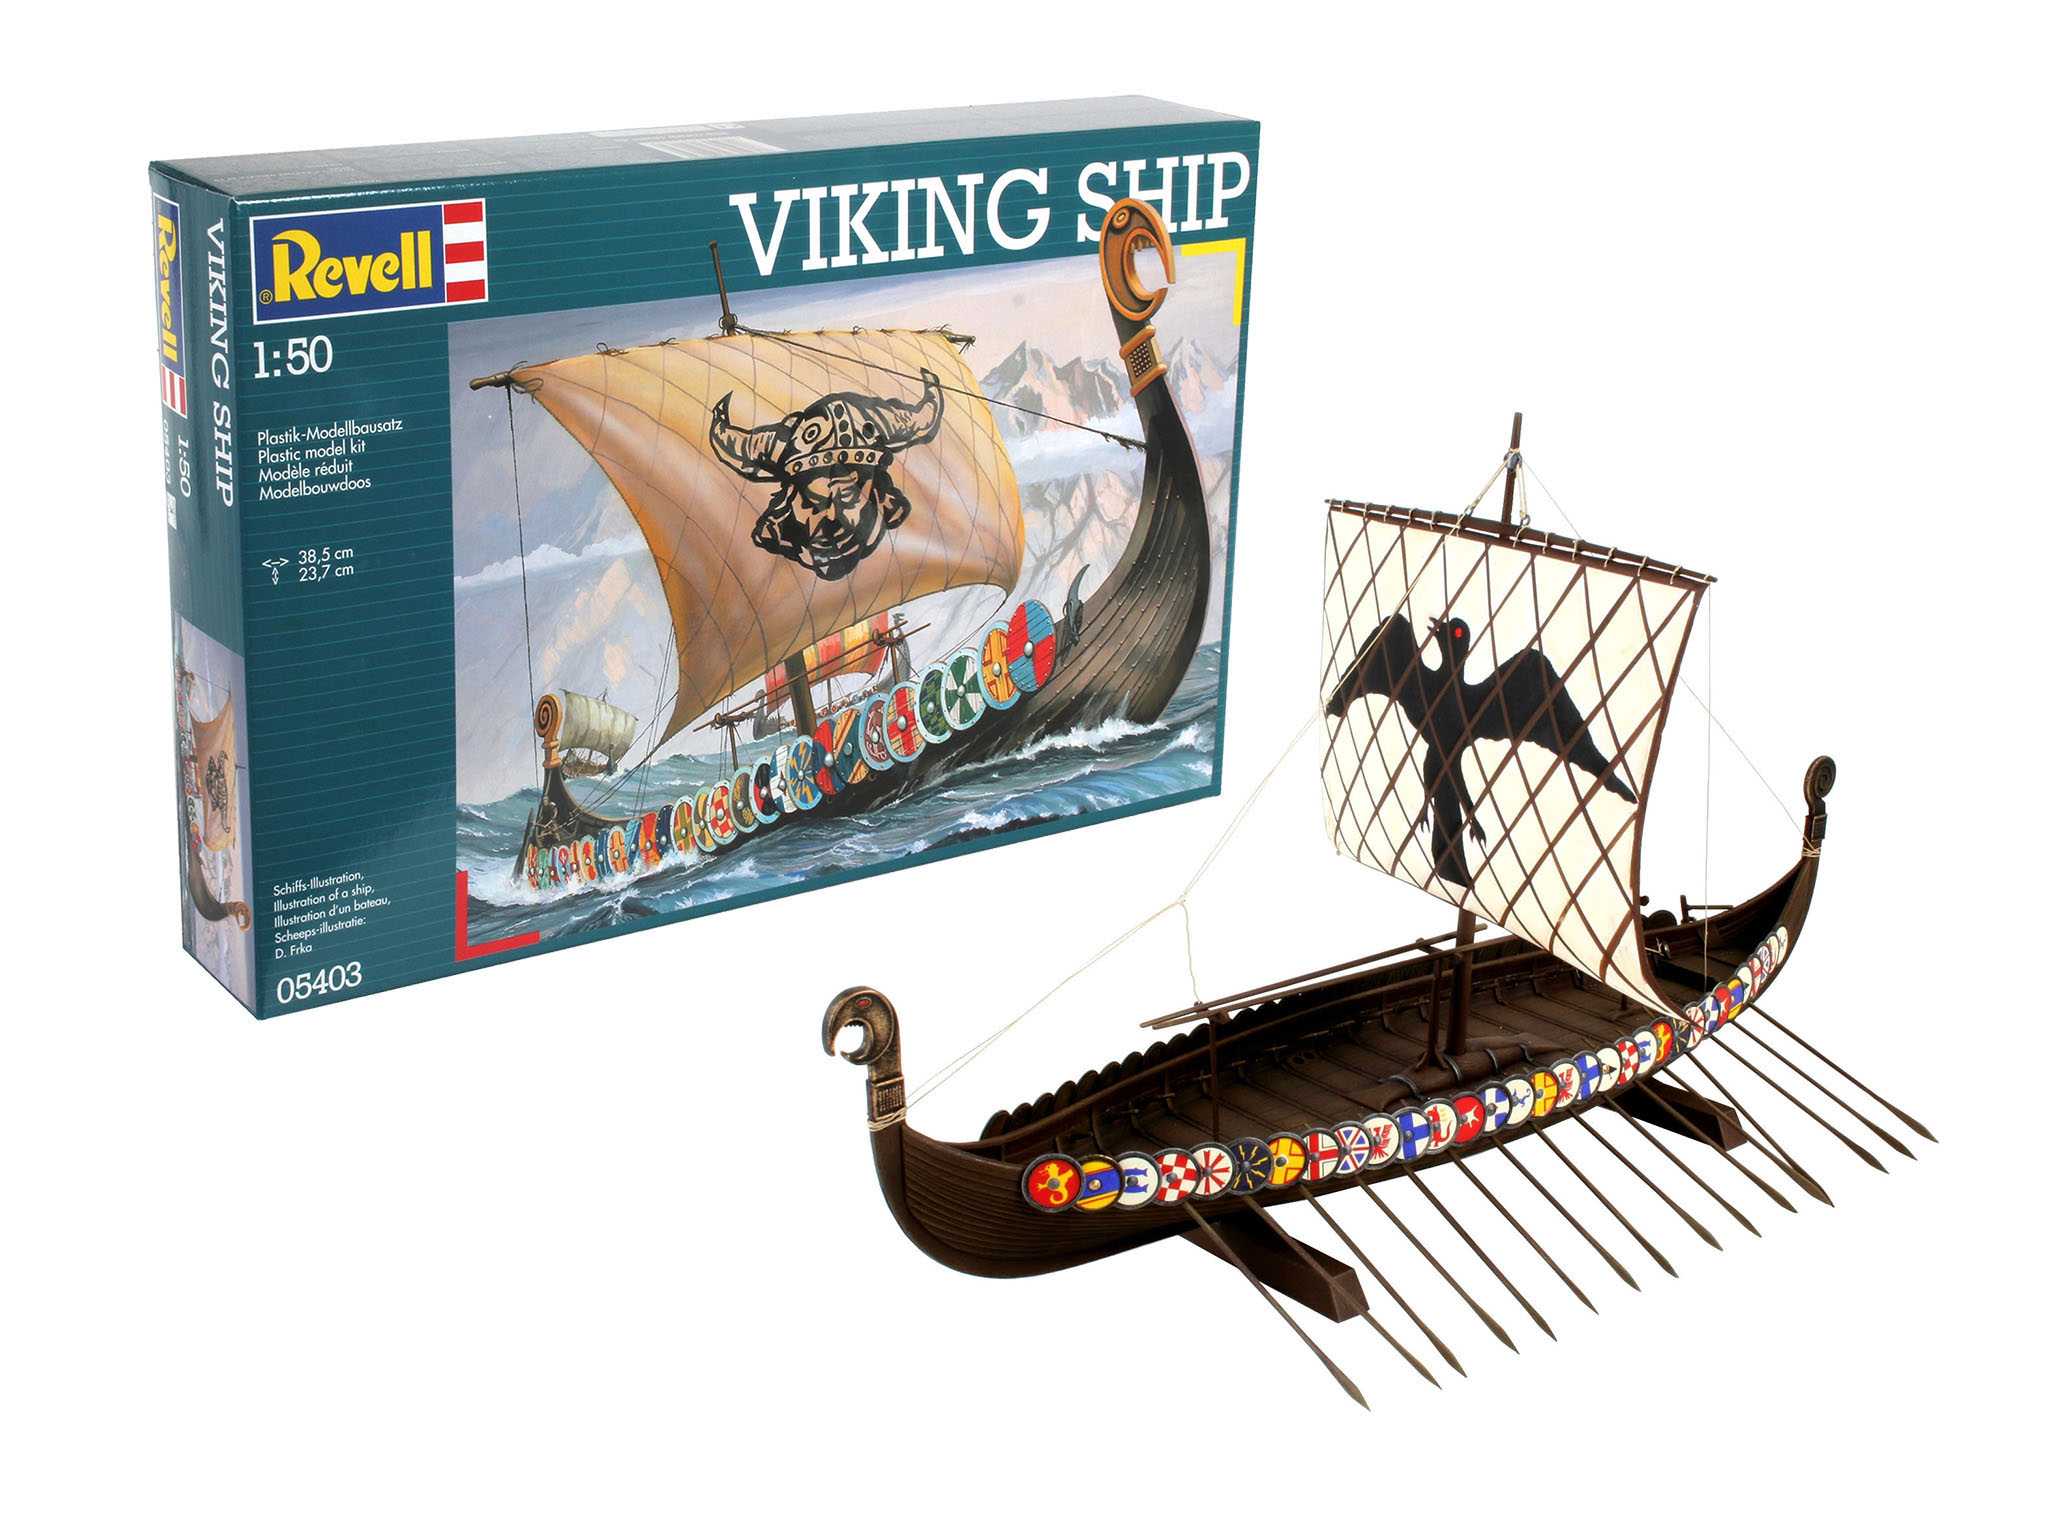 Fotografie ModelSet loď 65403 - Viking Ship (1:50)